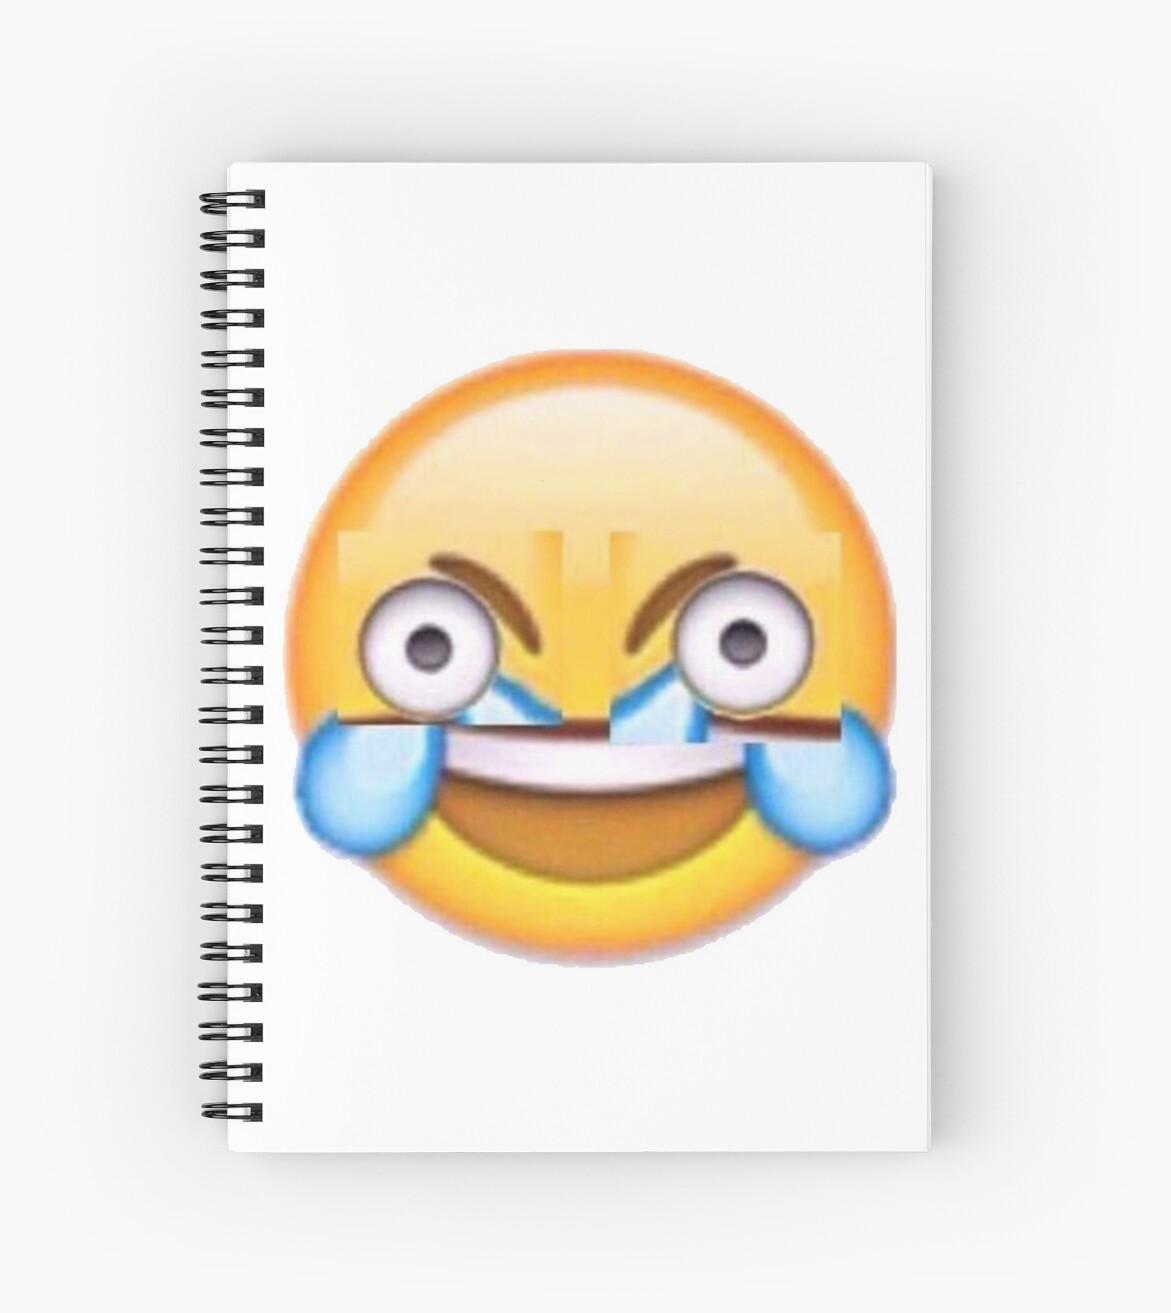 Open Eye Crying Laughing Emoji Spiral Notebooks By Upthecreek90